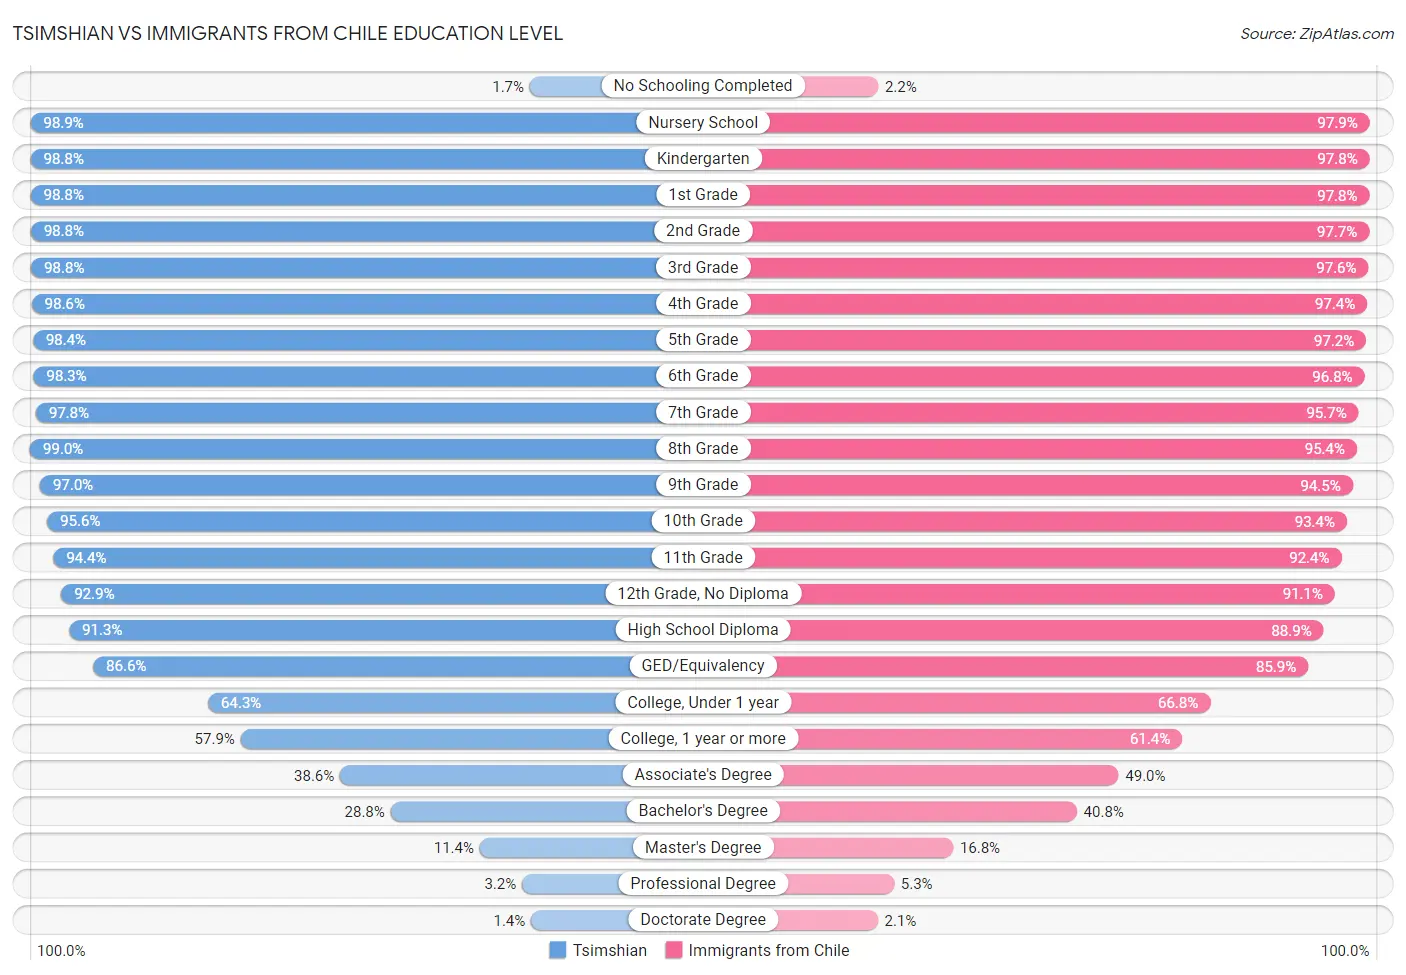 Tsimshian vs Immigrants from Chile Education Level